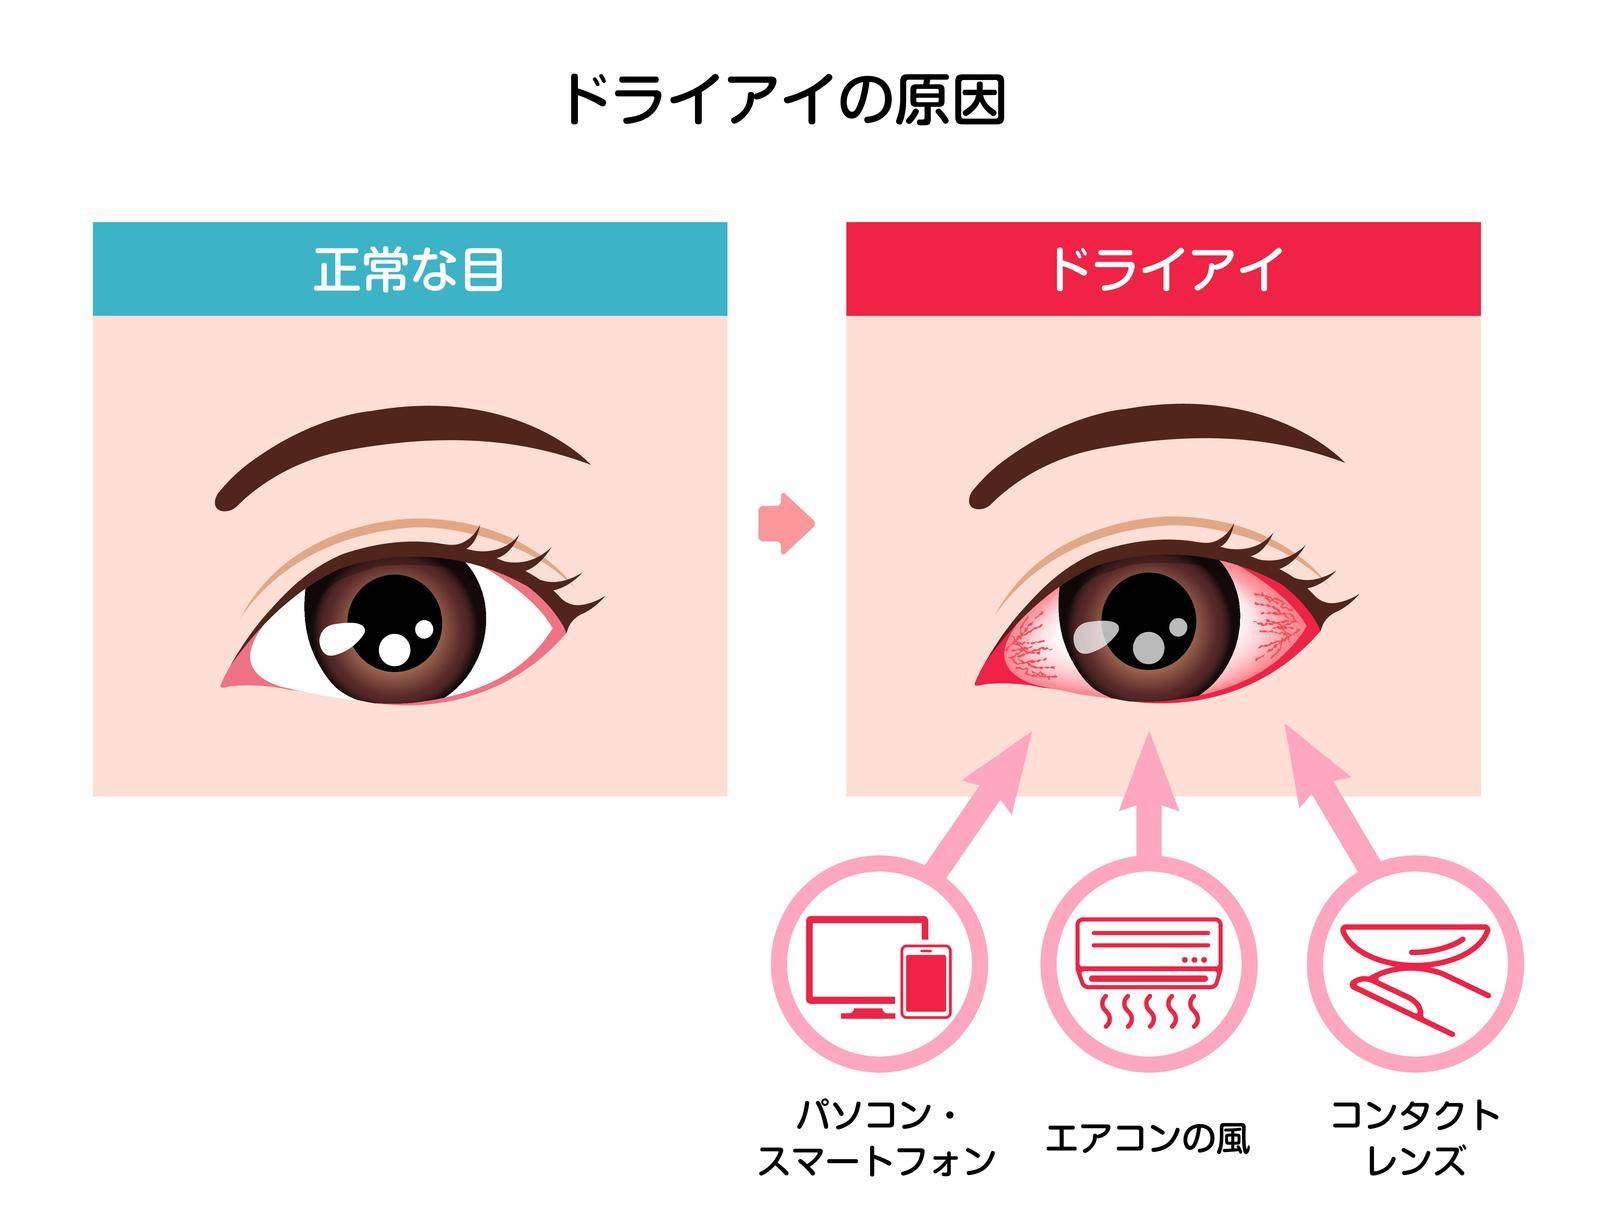 Causes of dry eye vector illustration (Japanese)